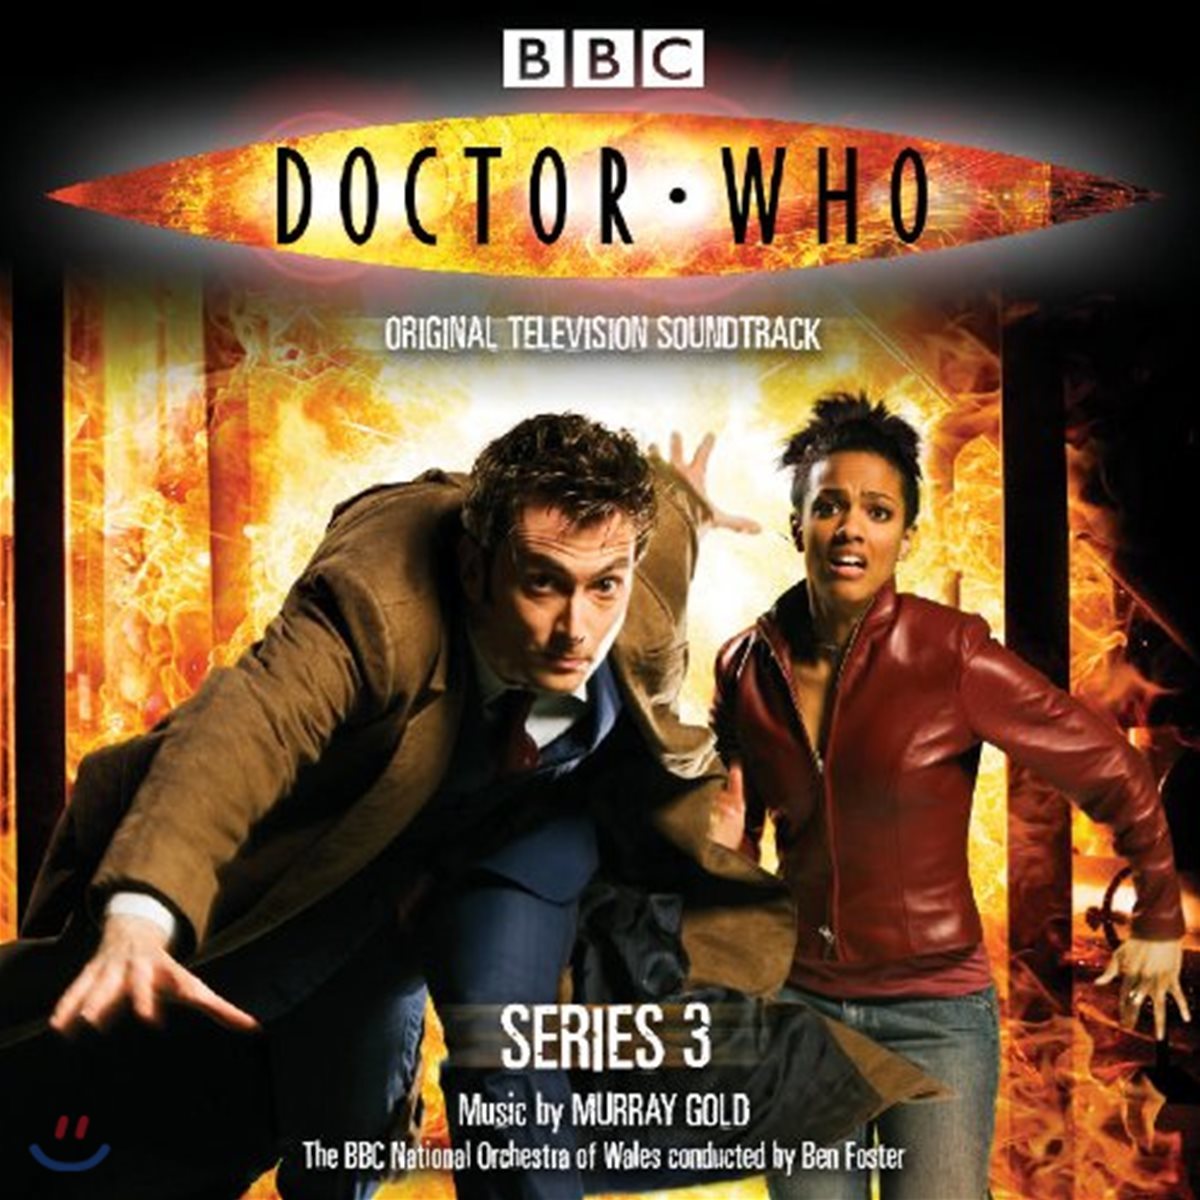 BBC 닥터 후 시리즈 3 드라마음악 (Doctor Who Series 3 OST by Murray Gold)